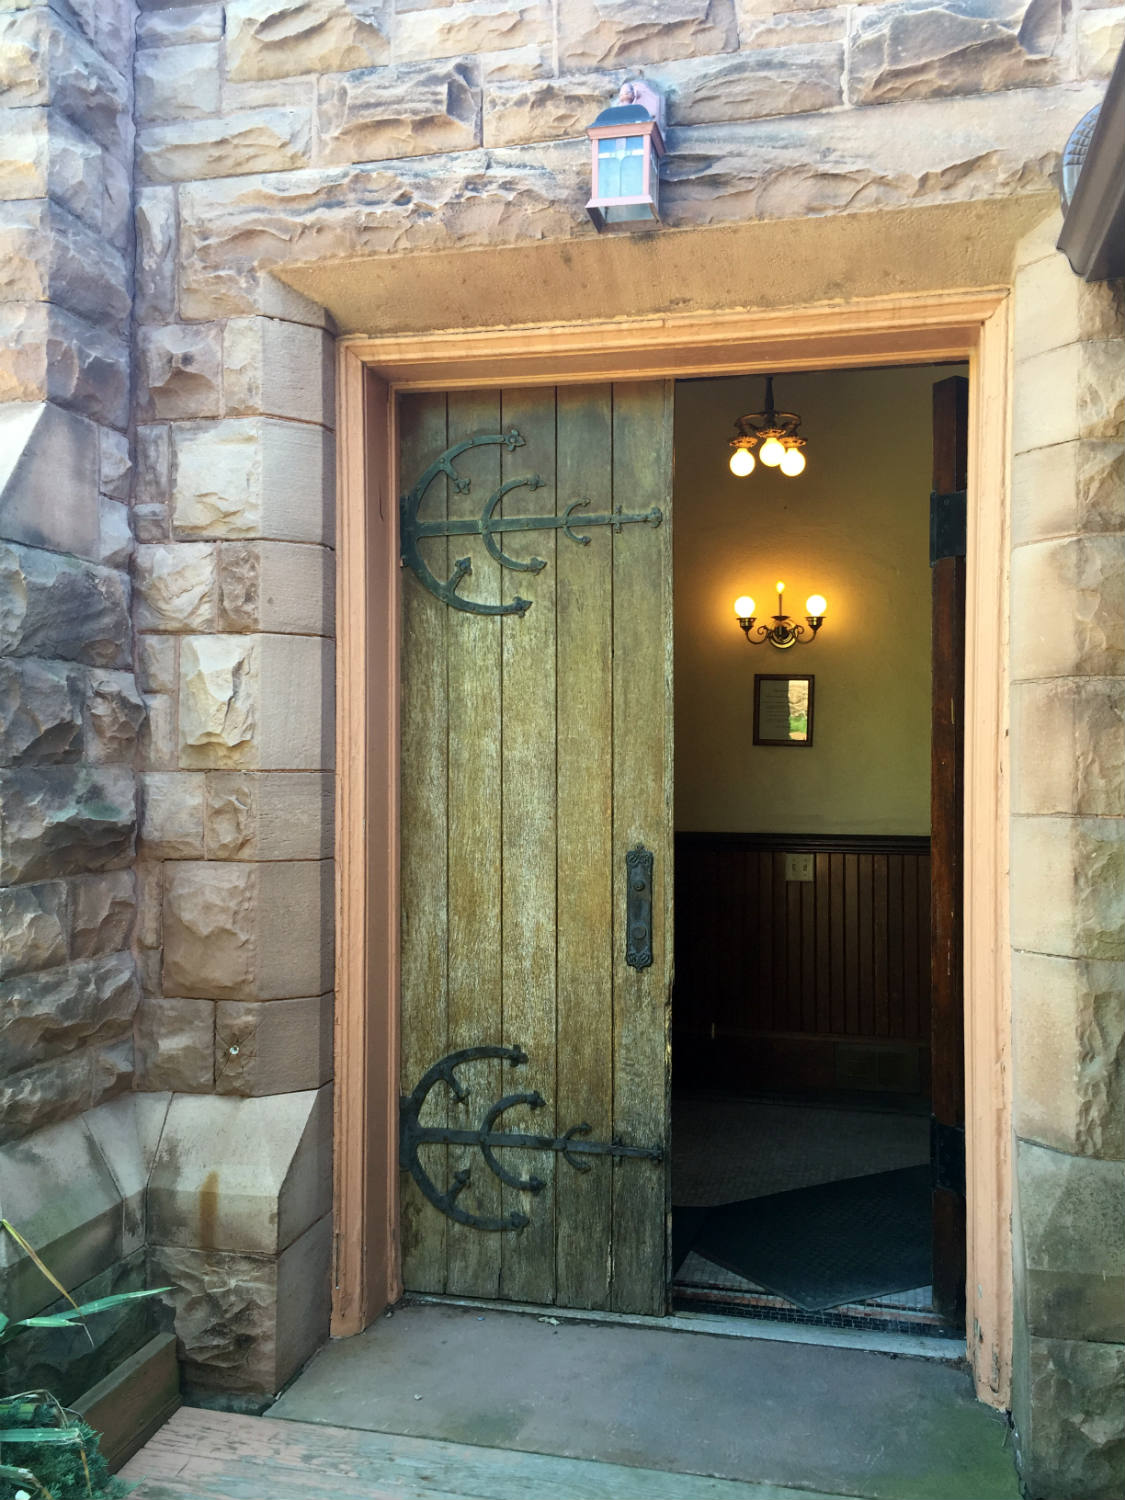 Entranceway at the Pullman Memorial Universalist Church in Albion